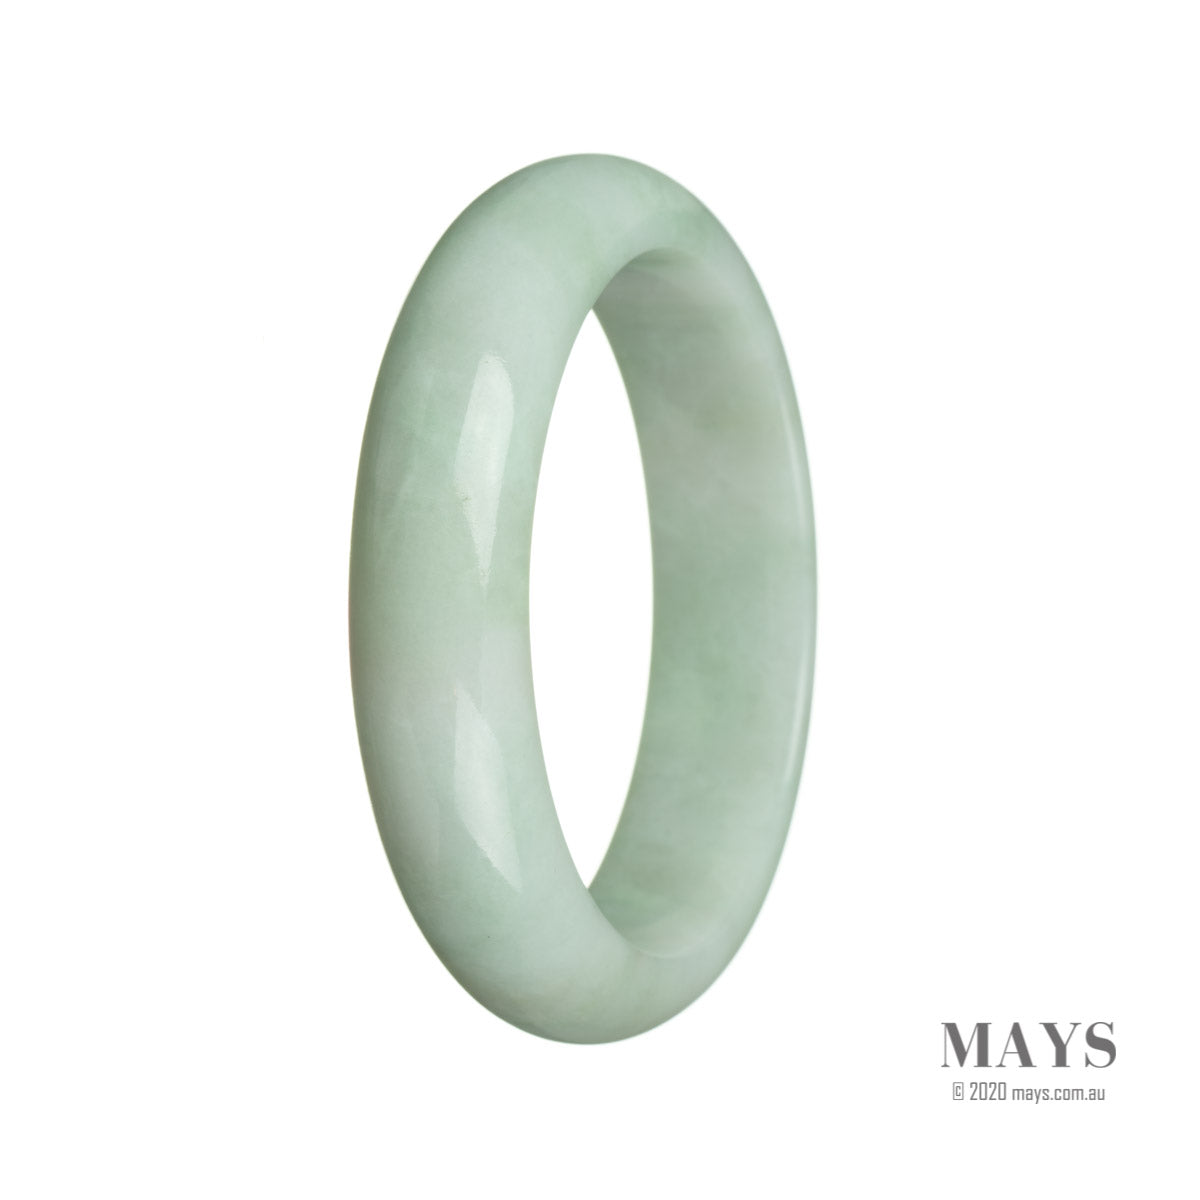 A light green Burmese jade bracelet with a half moon shape, certified as Grade A quality.